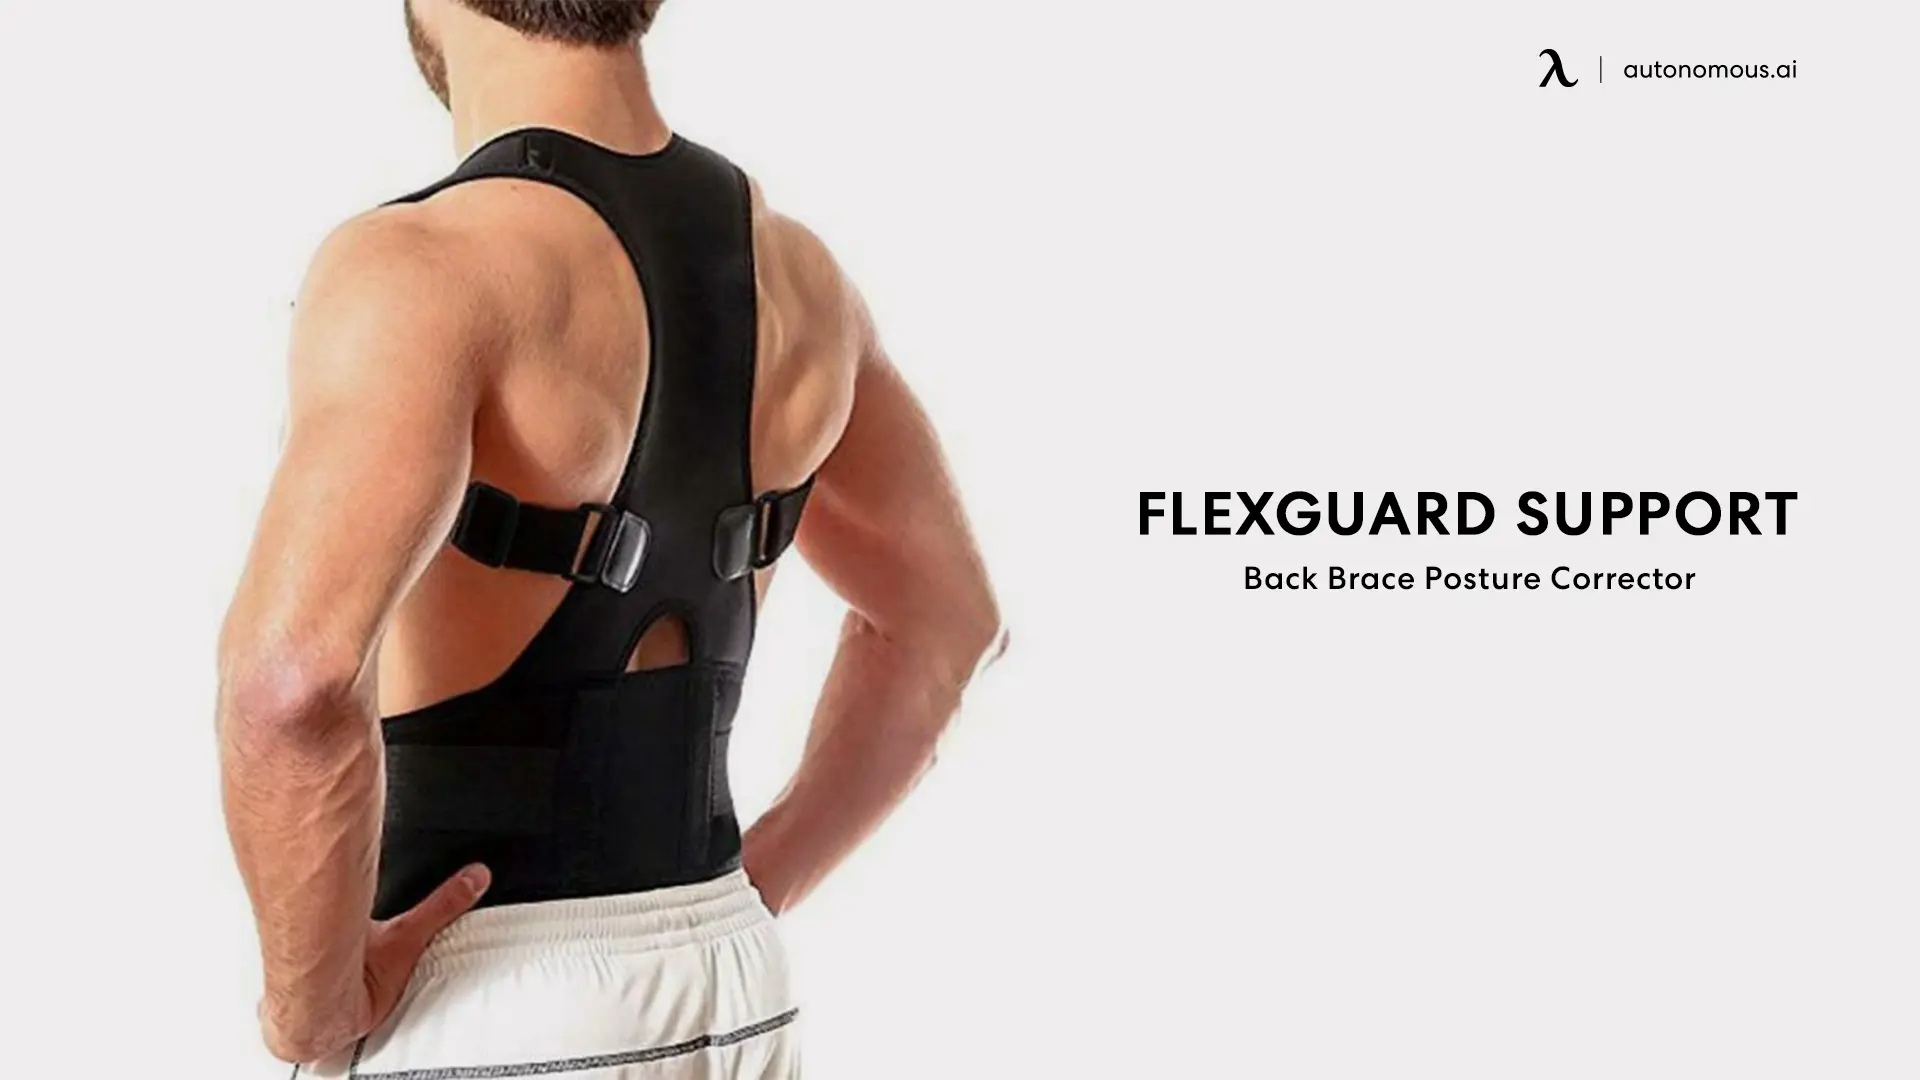 Back Brace Posture Corrector by Flexguard Support